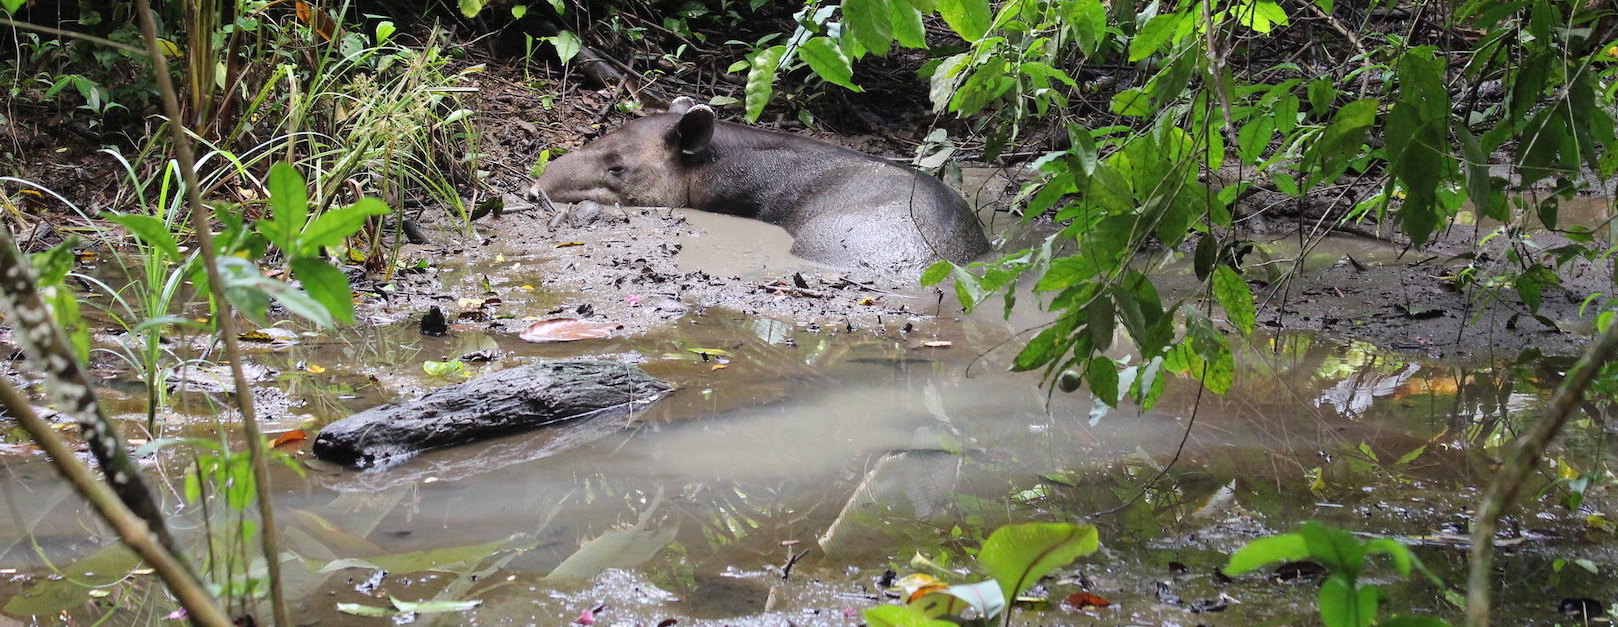 Tapirs: Costa Rica’s Fantastic Beasts